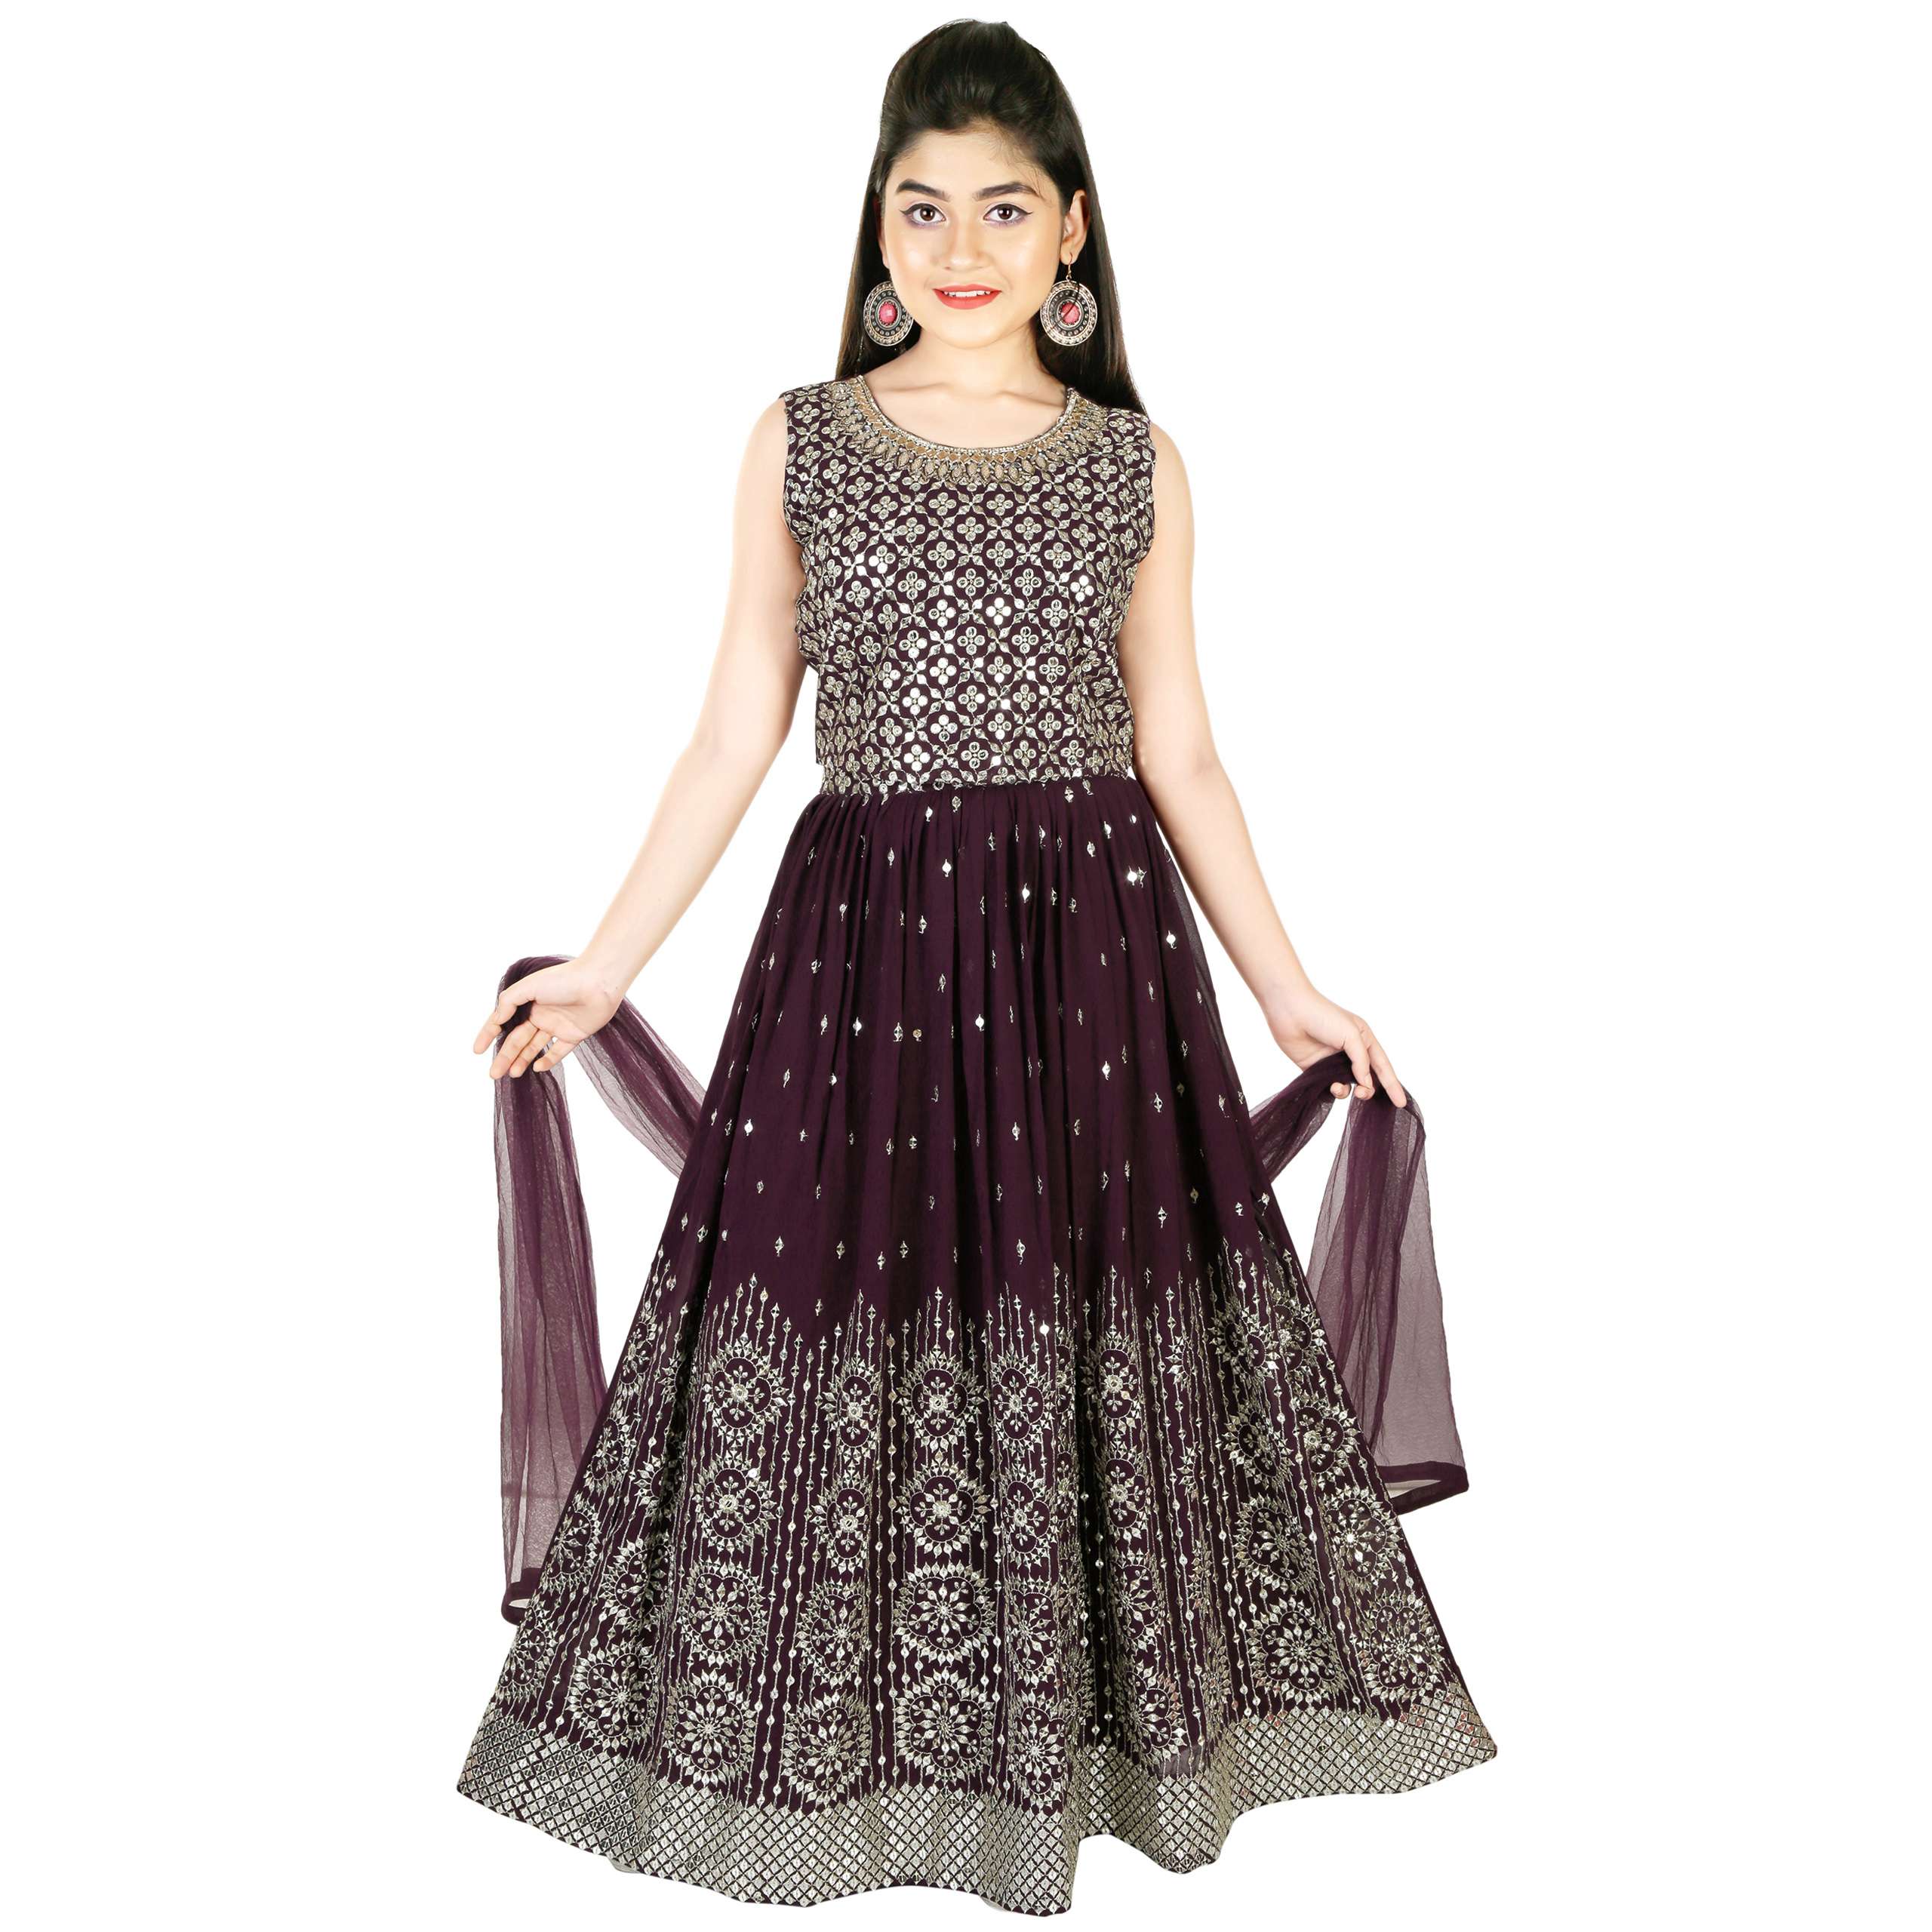 Balaji Emporium Presents Kids Wear Special Designer Indian Party Wear Anarkali Salwar Kameez Suit Girlish Dress Collection At Best Price 3020